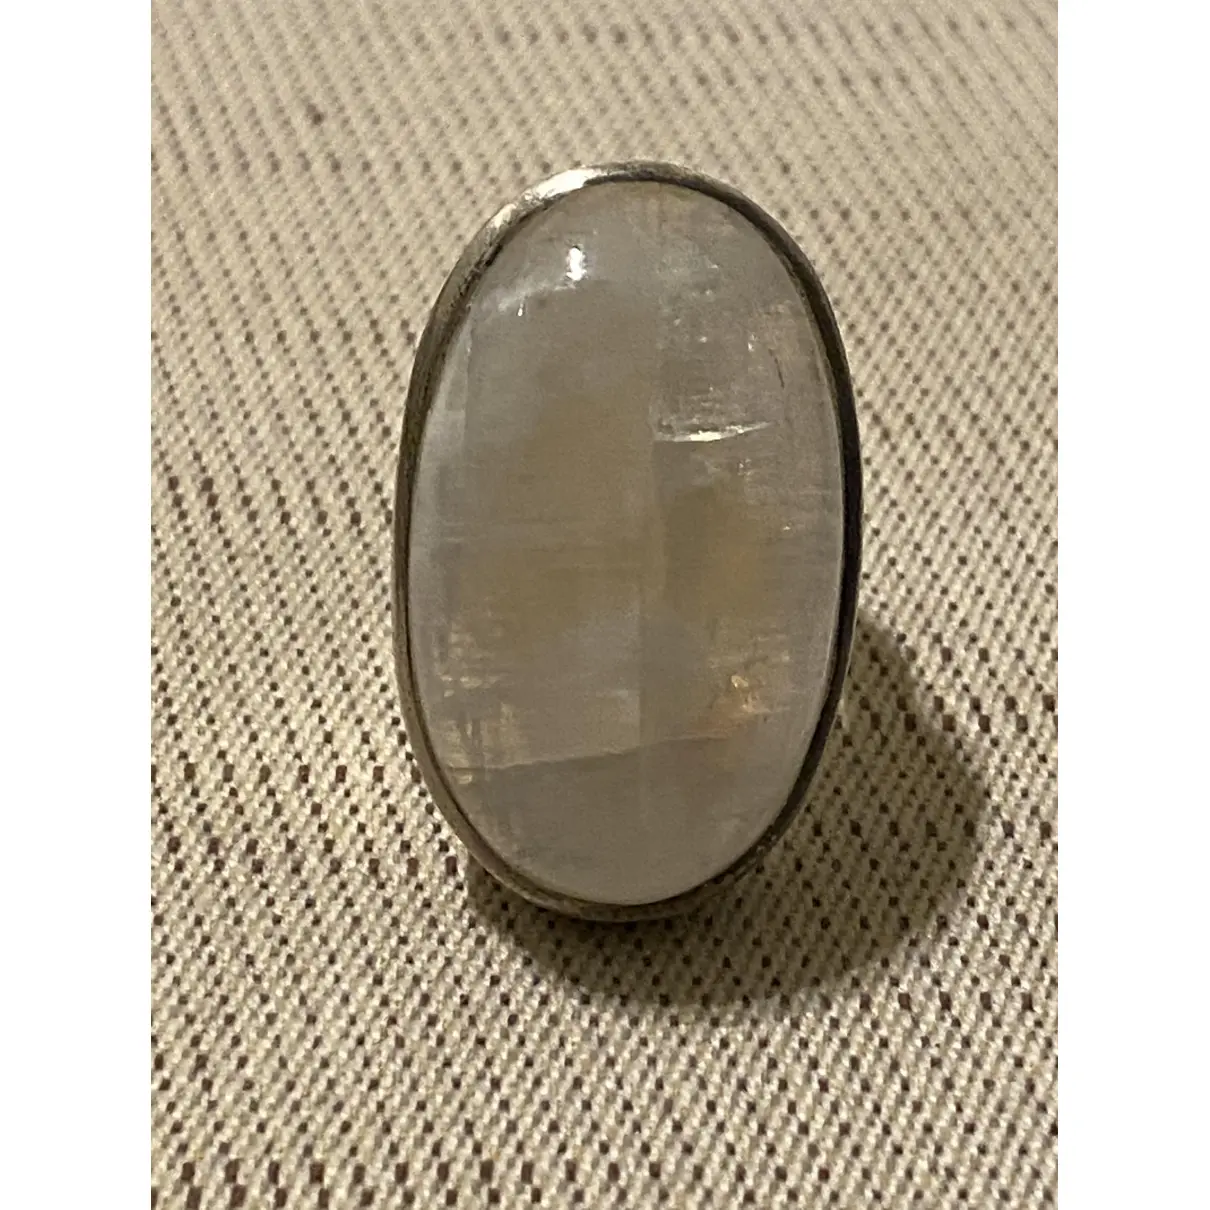 Buy Hancock Silver ring online - Vintage